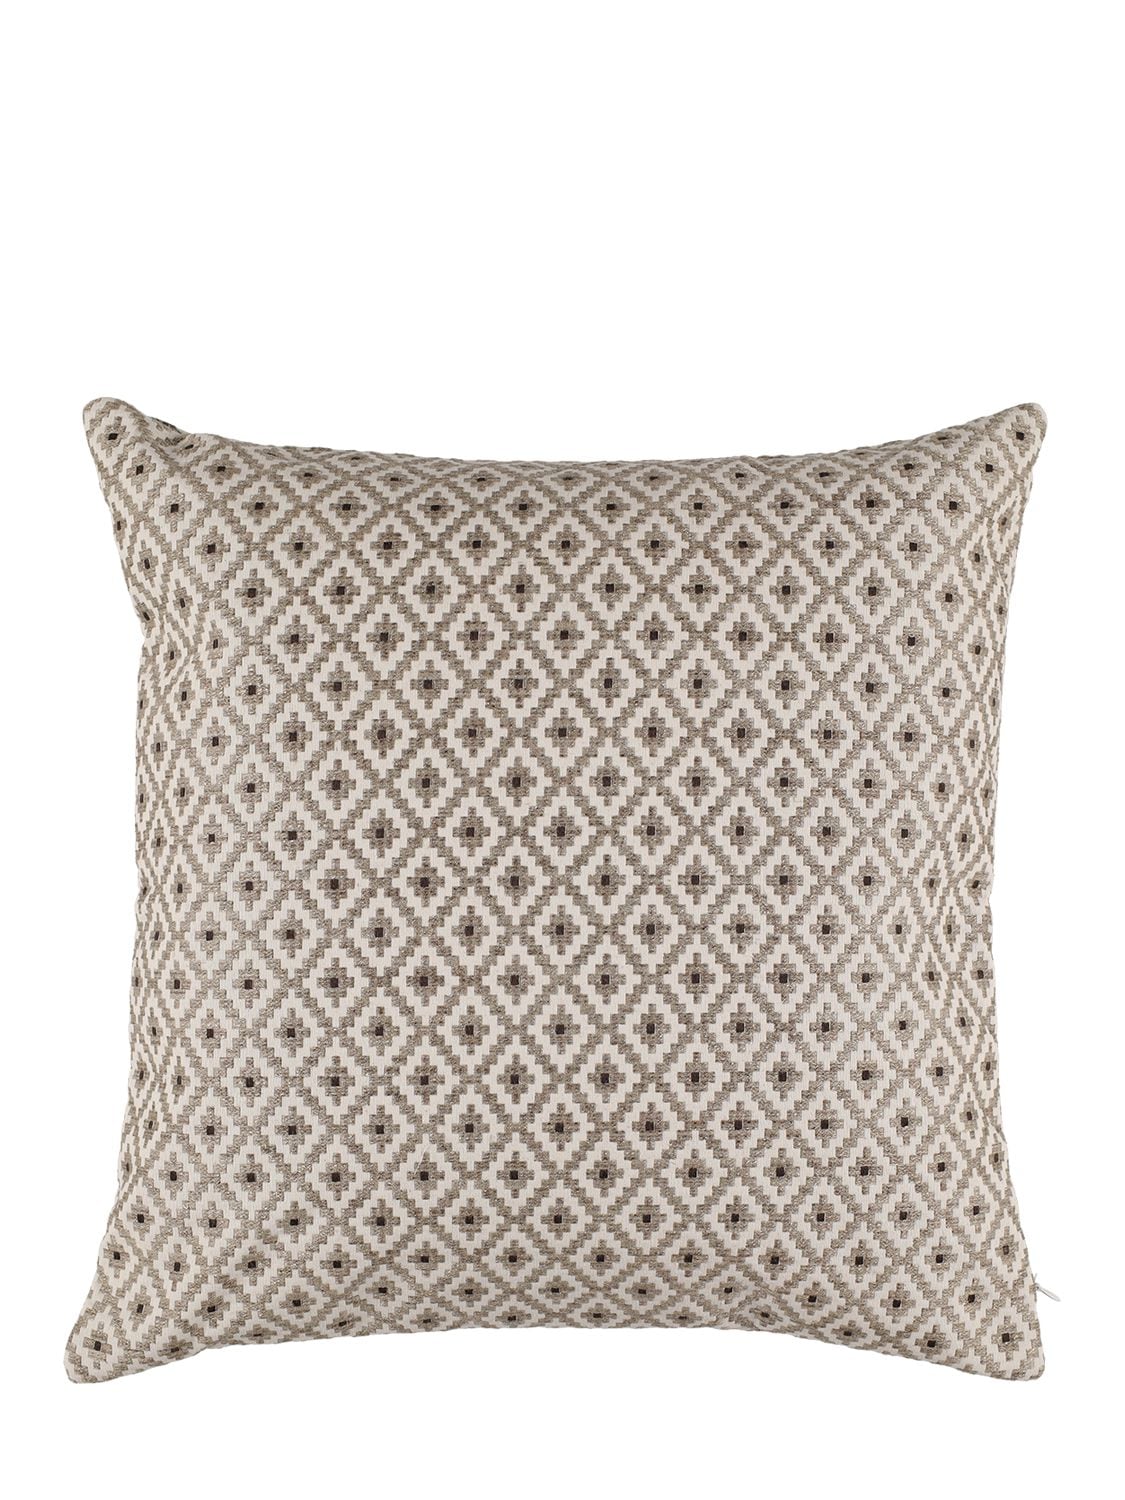 Frette Luxury Domino Cushion In Naturale,umber